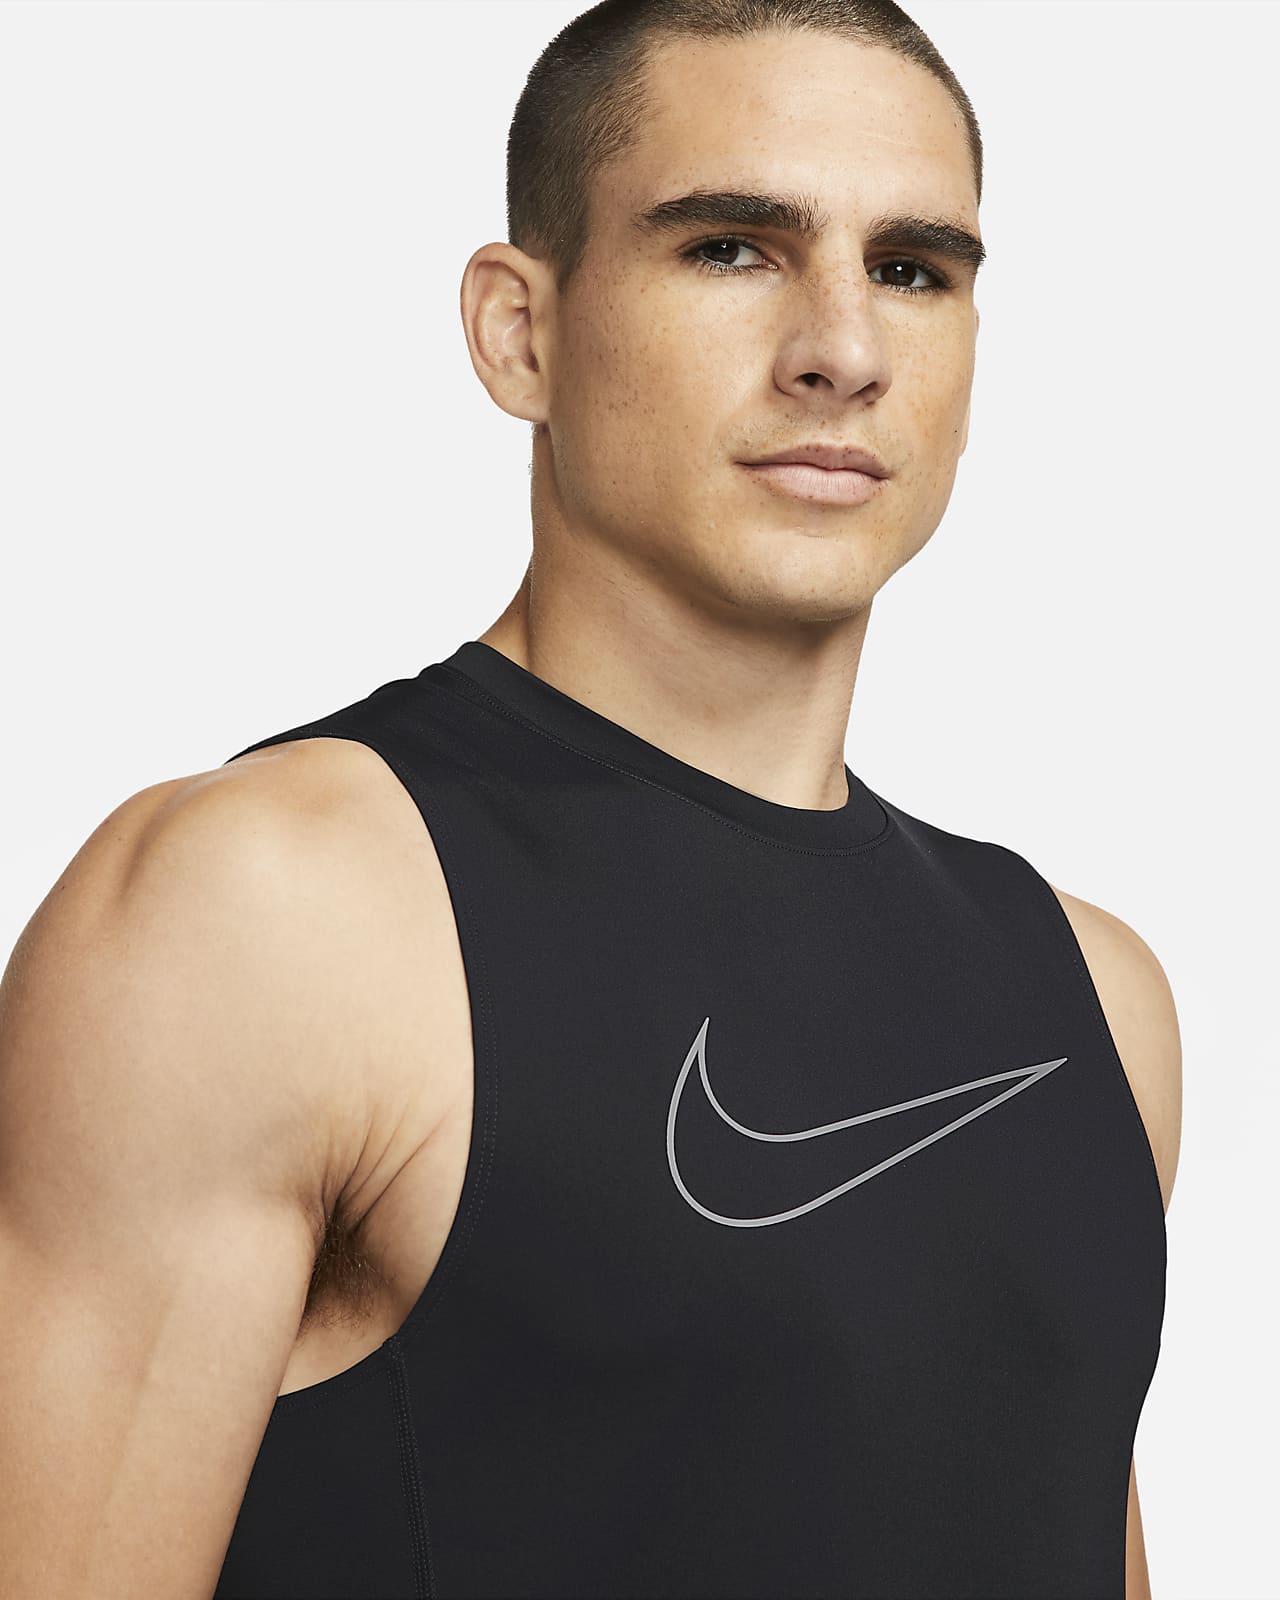 rijkdom holte mozaïek Nike Pro Dri-FIT Men's Slim Fit Sleeveless Top. Nike.com